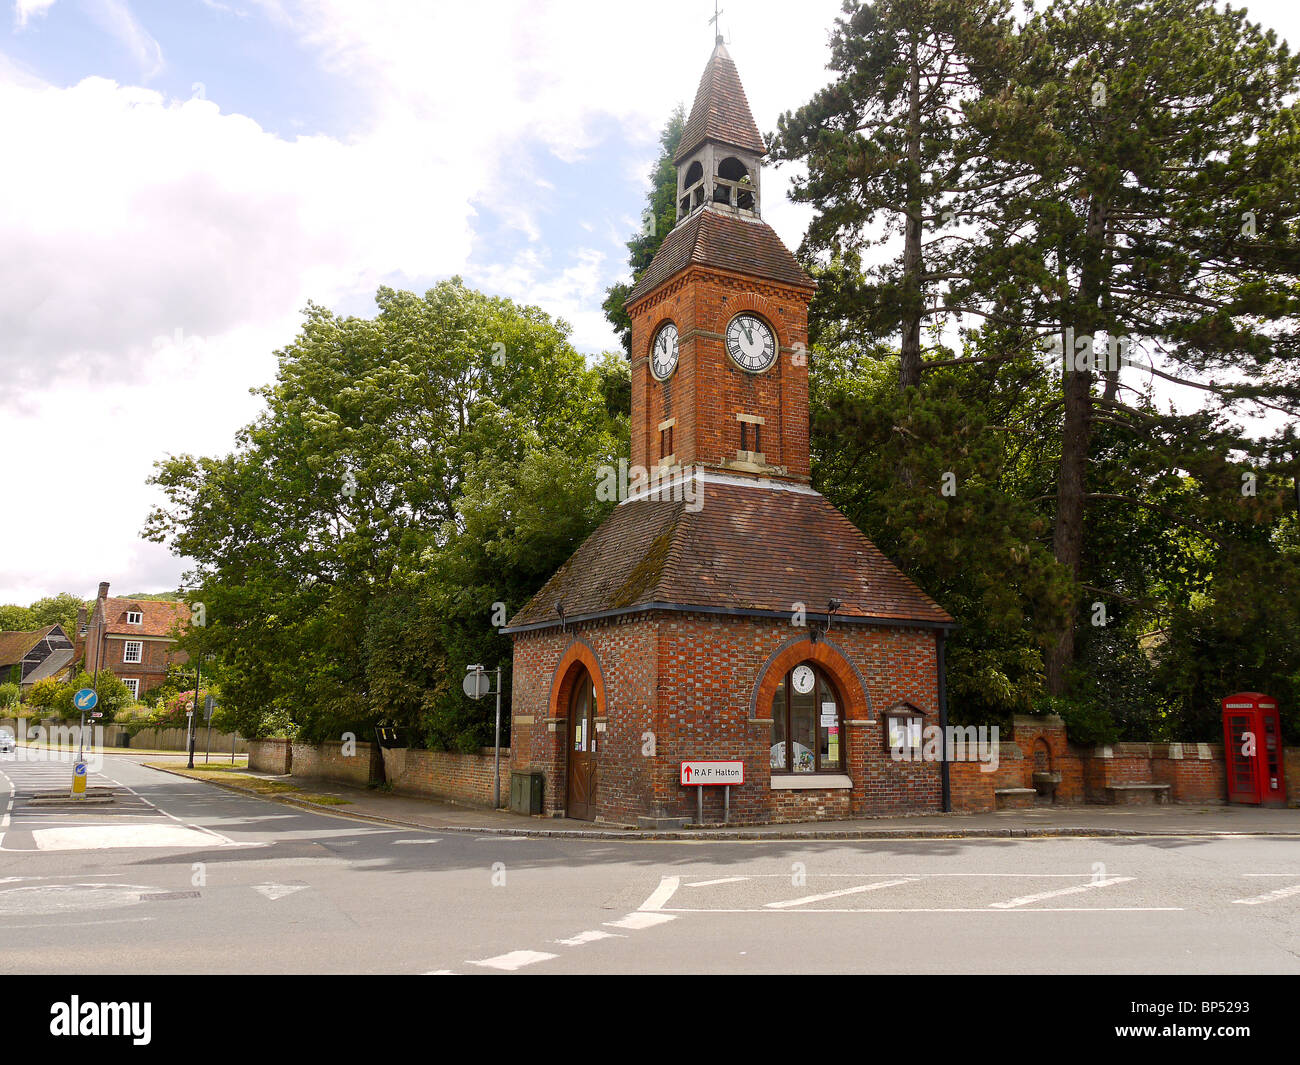 Wendover Church and clock tower in Wendover, Bucks, UK Stock Photo